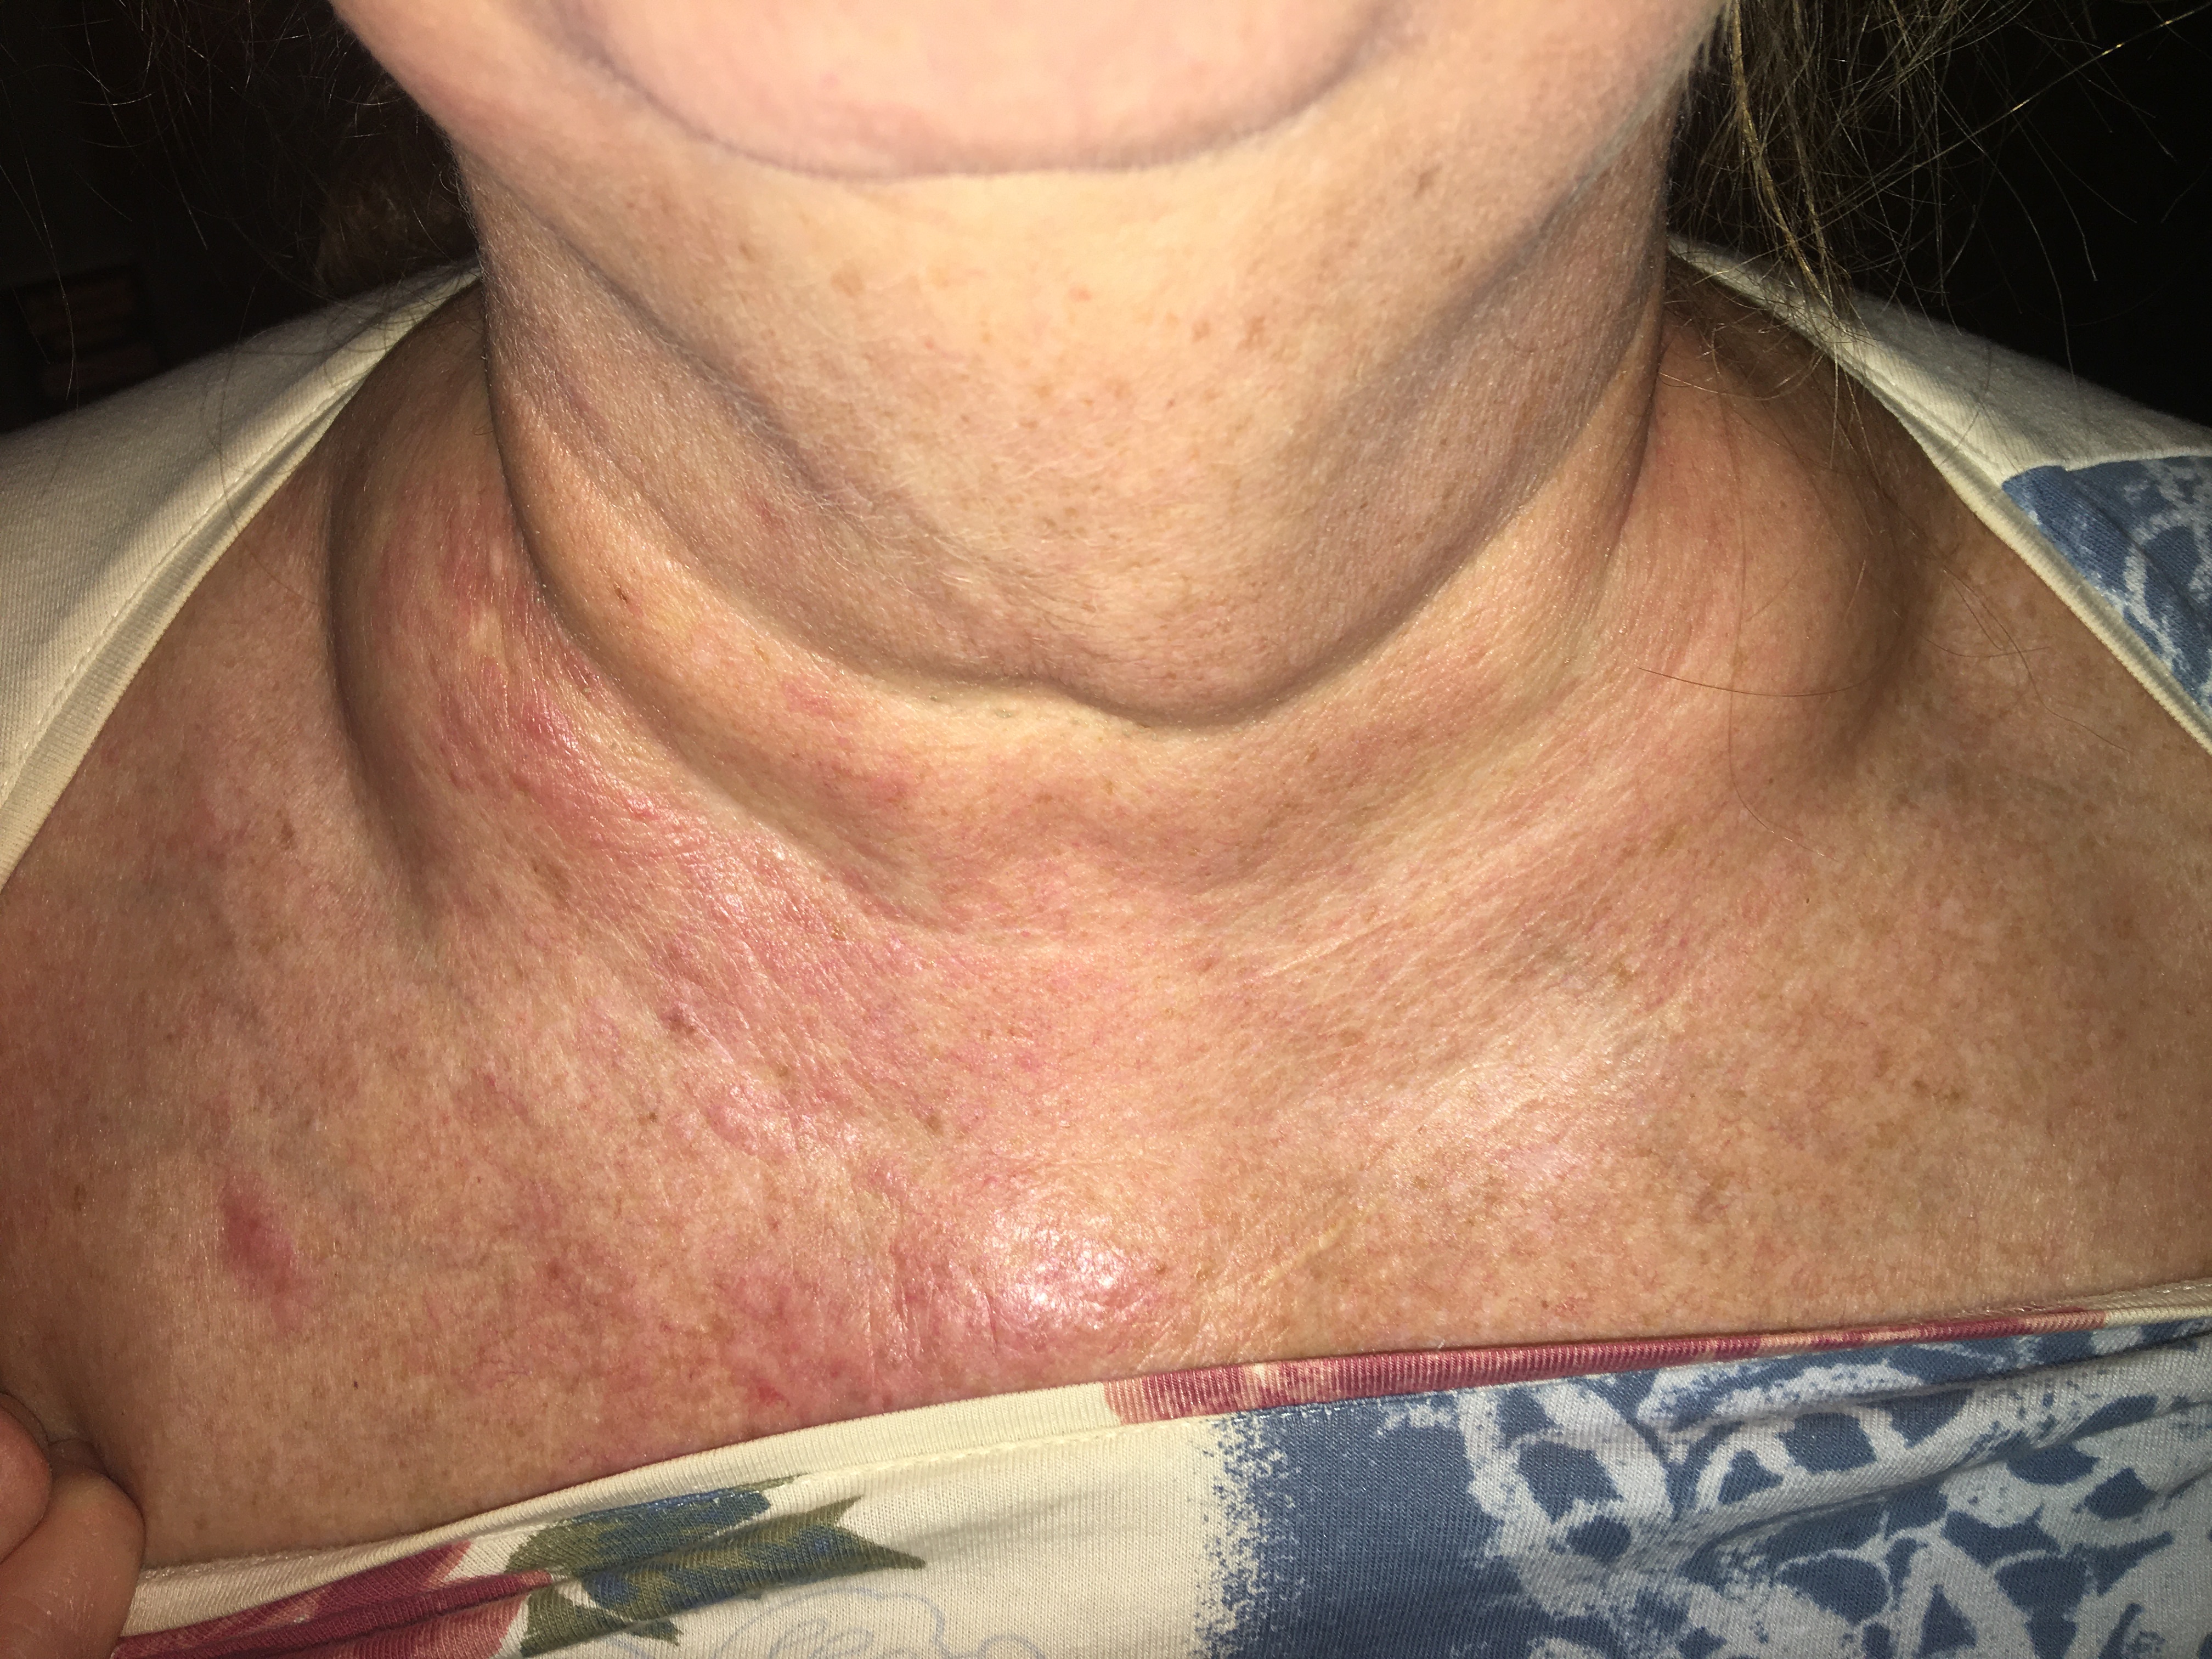 lymph node swollen on back of neck